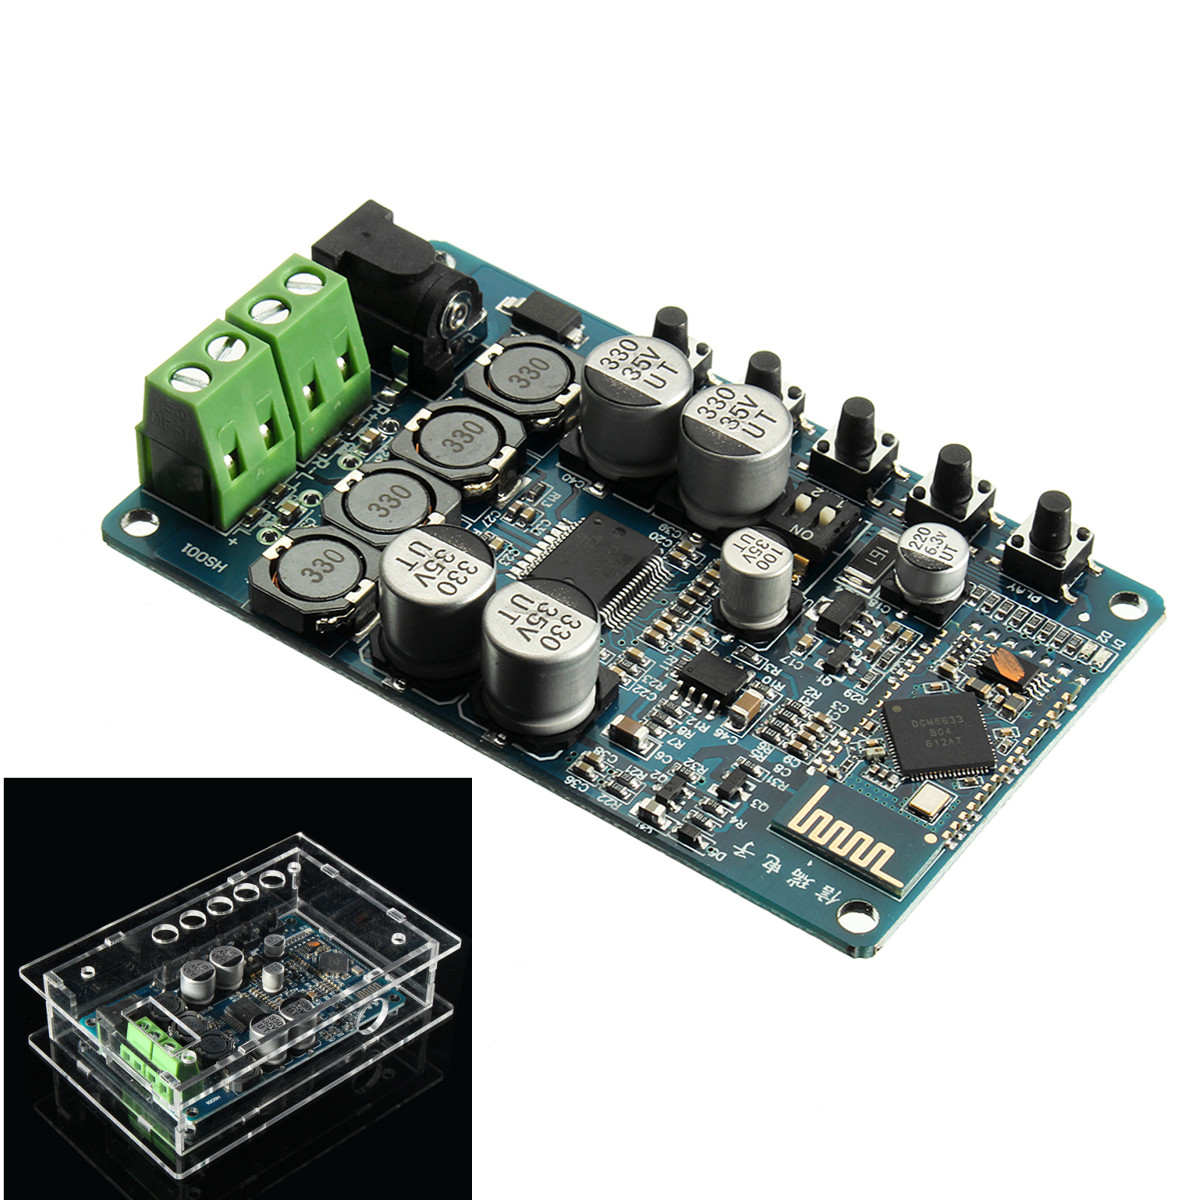 

TDA7492P Digital Amplifier Board 50W+50W CSR8635 Bluetooth 4.0 Audio With Housing Kit